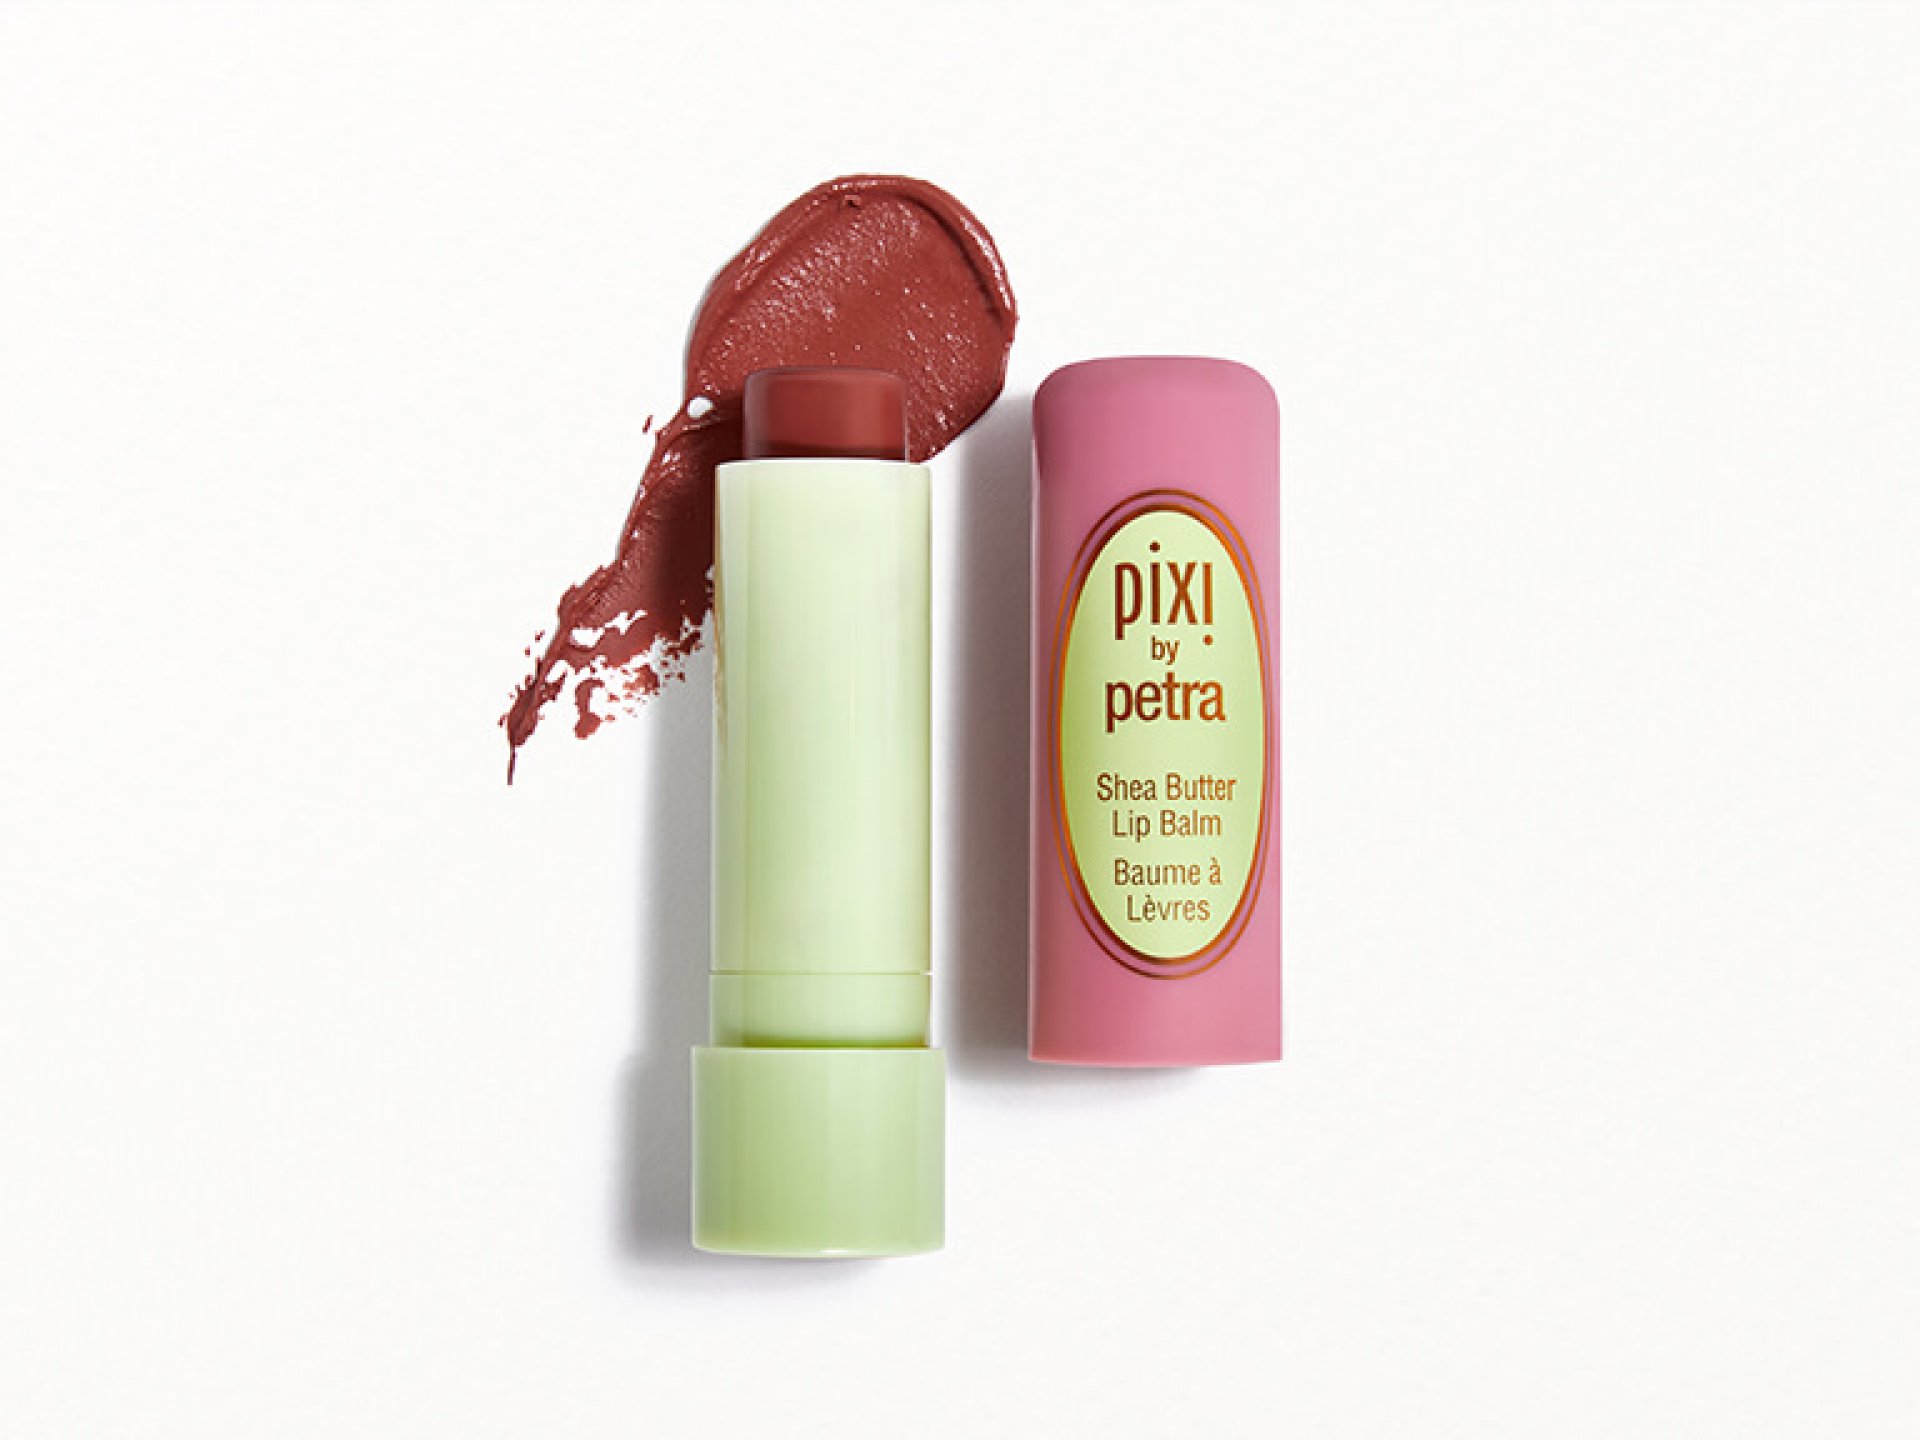 PIXI BY PETRA Shea Butter Lip Balm in Natural Rose